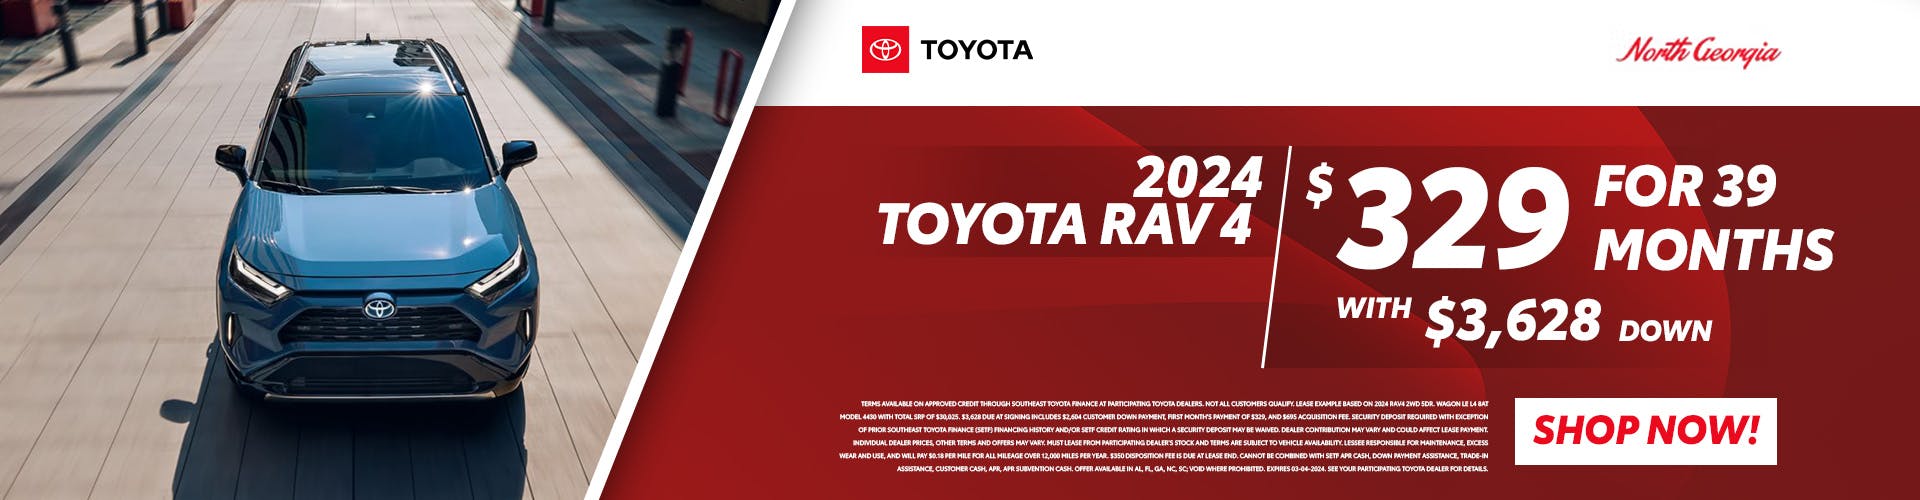 2024 Toyota RAV4 Special – Feb